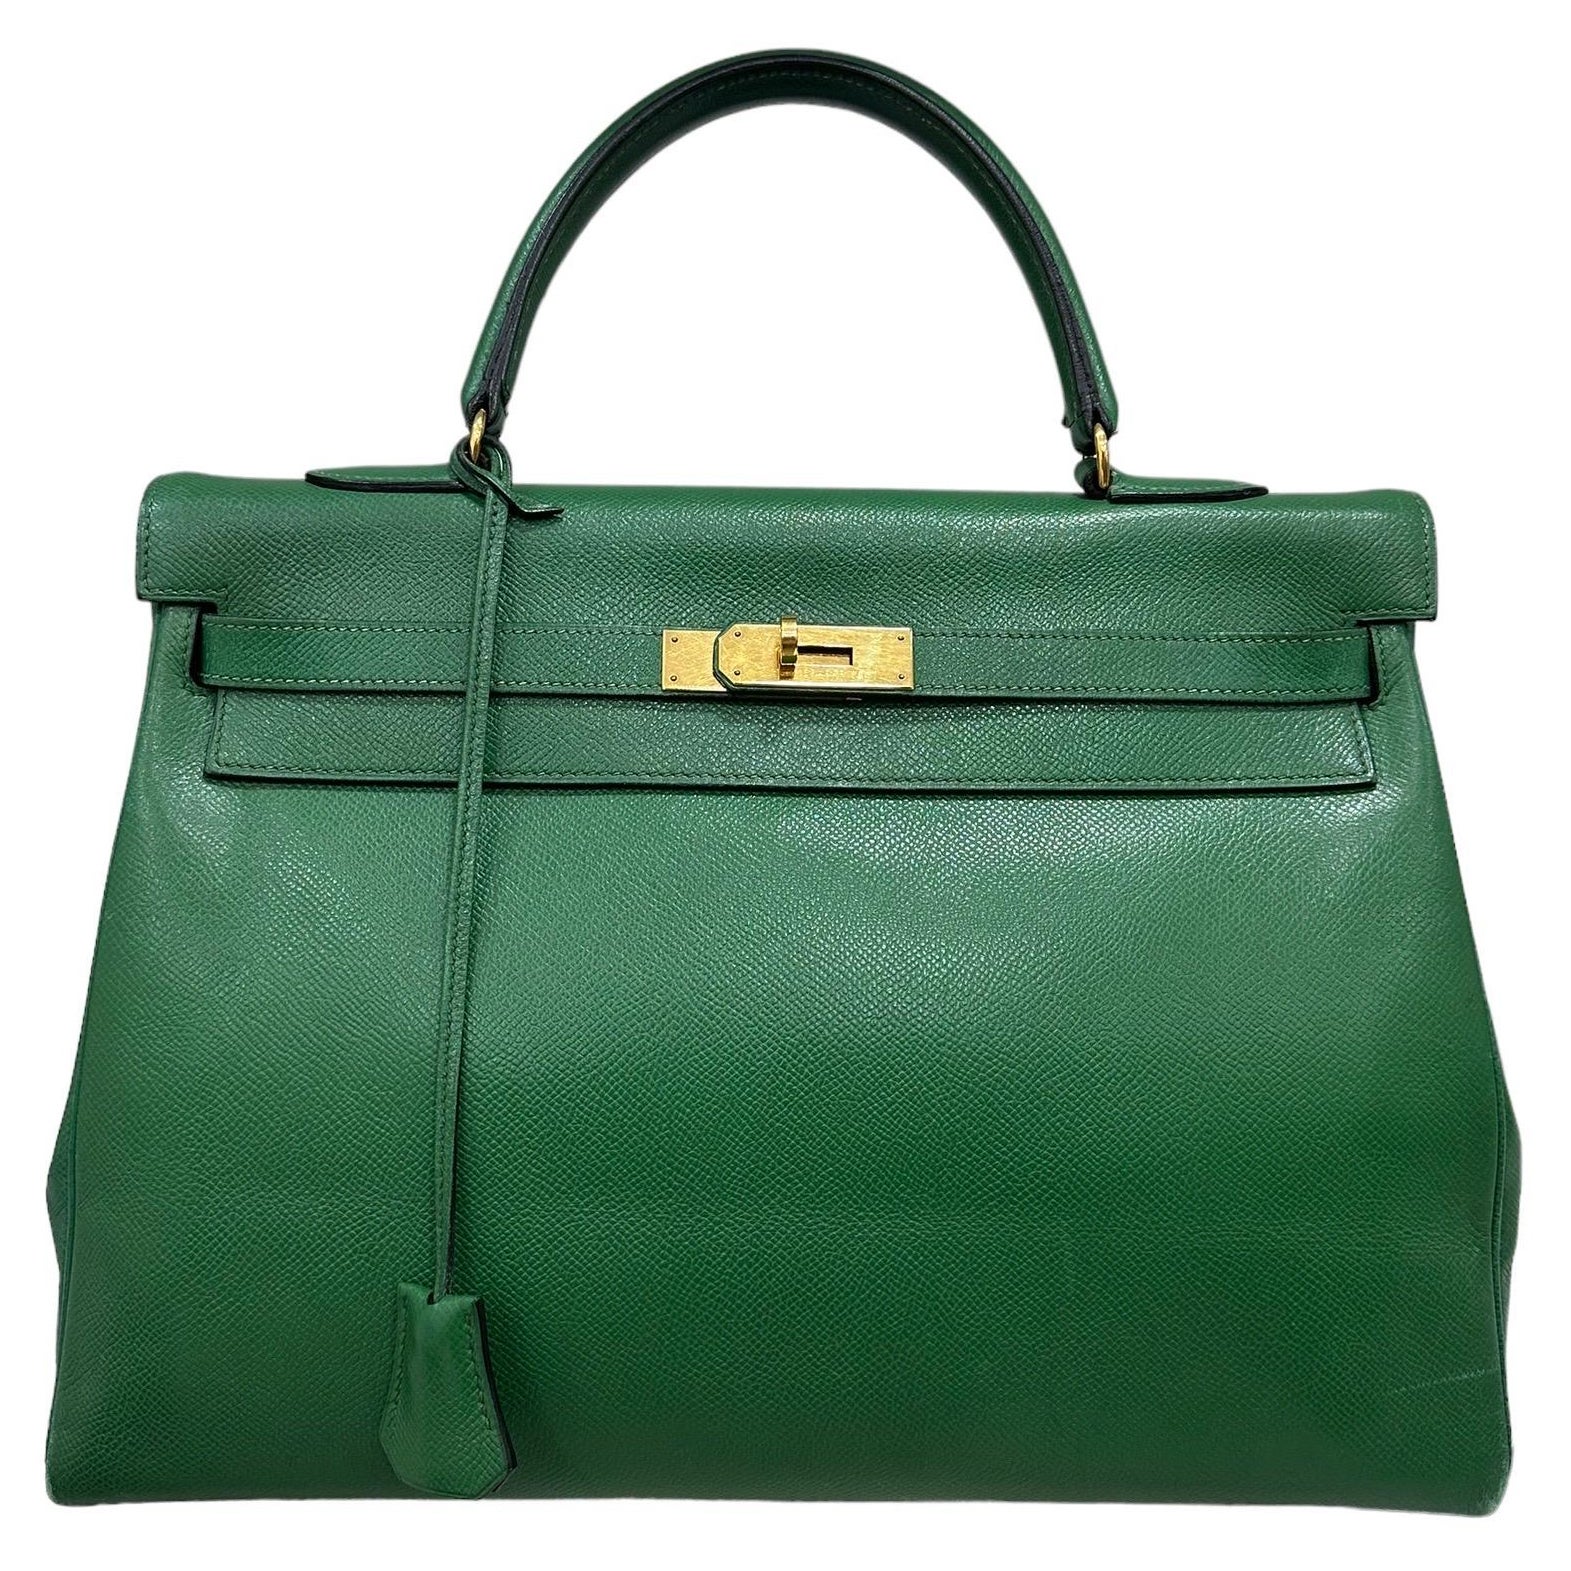 Hermès Kelly 35 Epsom Leather Vert Bengale Top Handle Bag